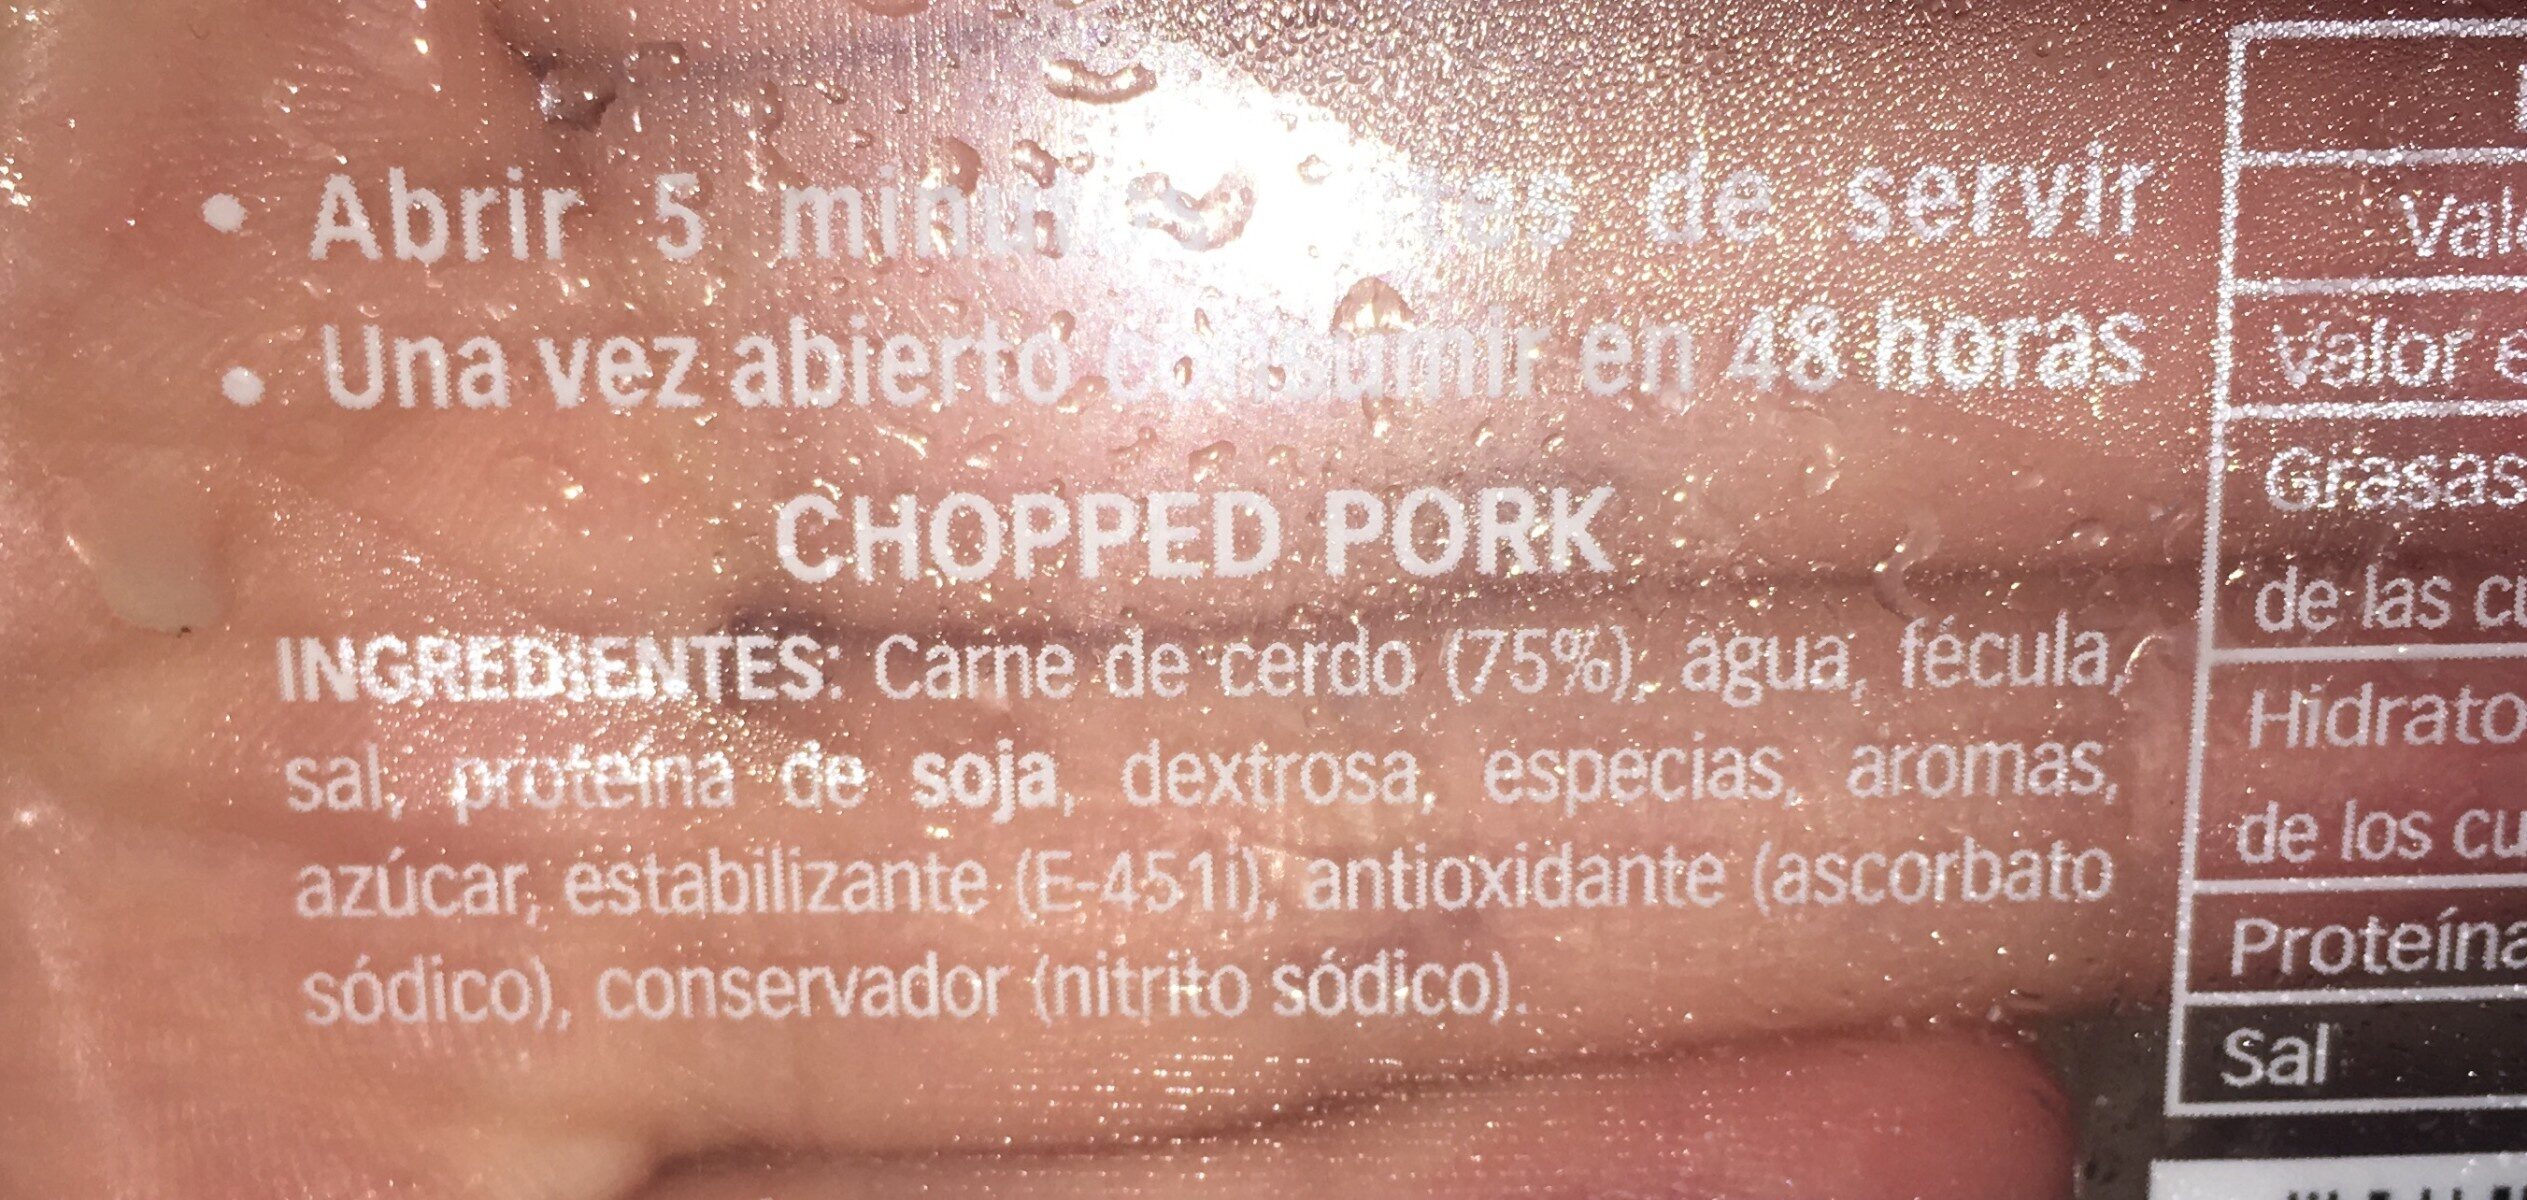 Chopped pork - Osagaiak - es